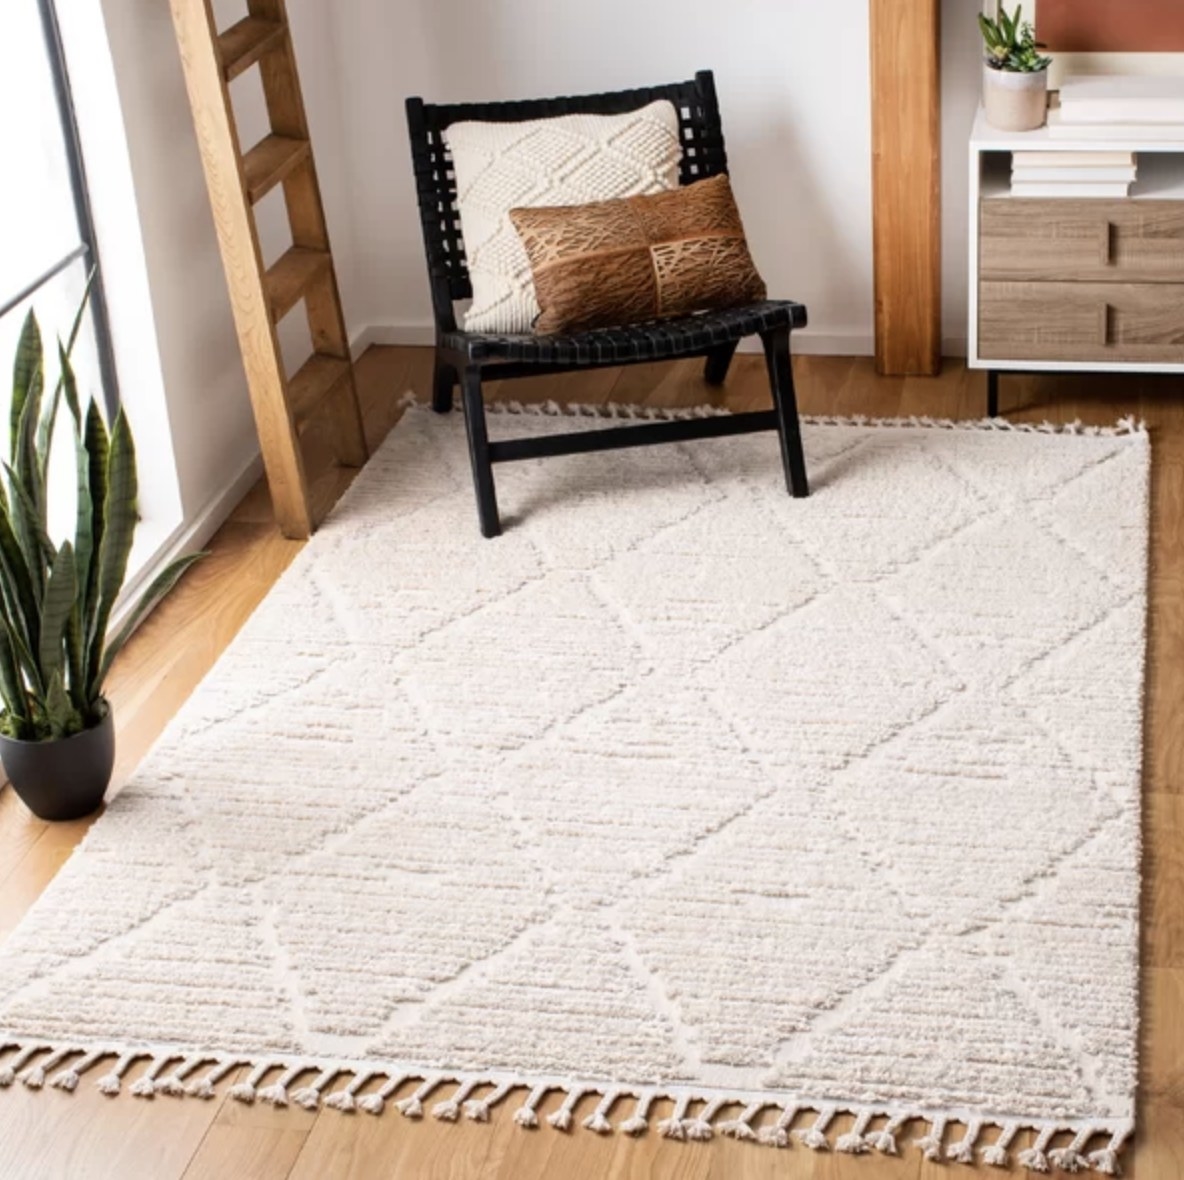 The white rug has raised plush rhombi patterns